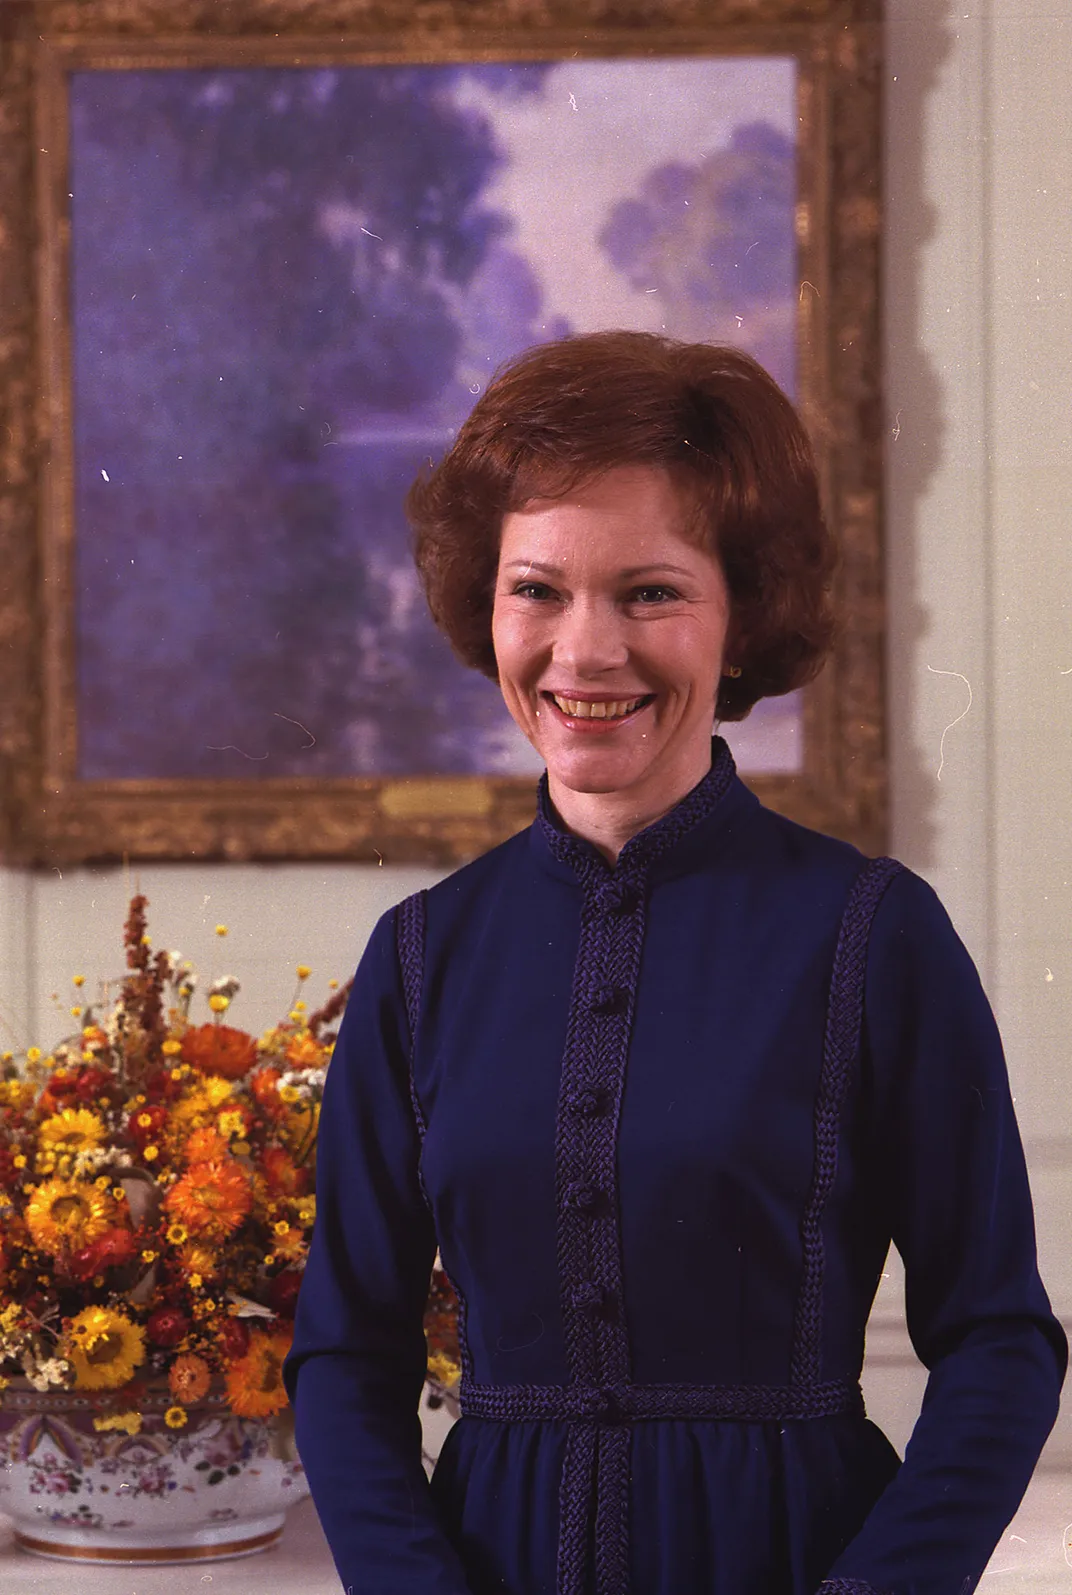 An official White House portrait of Rosalynn